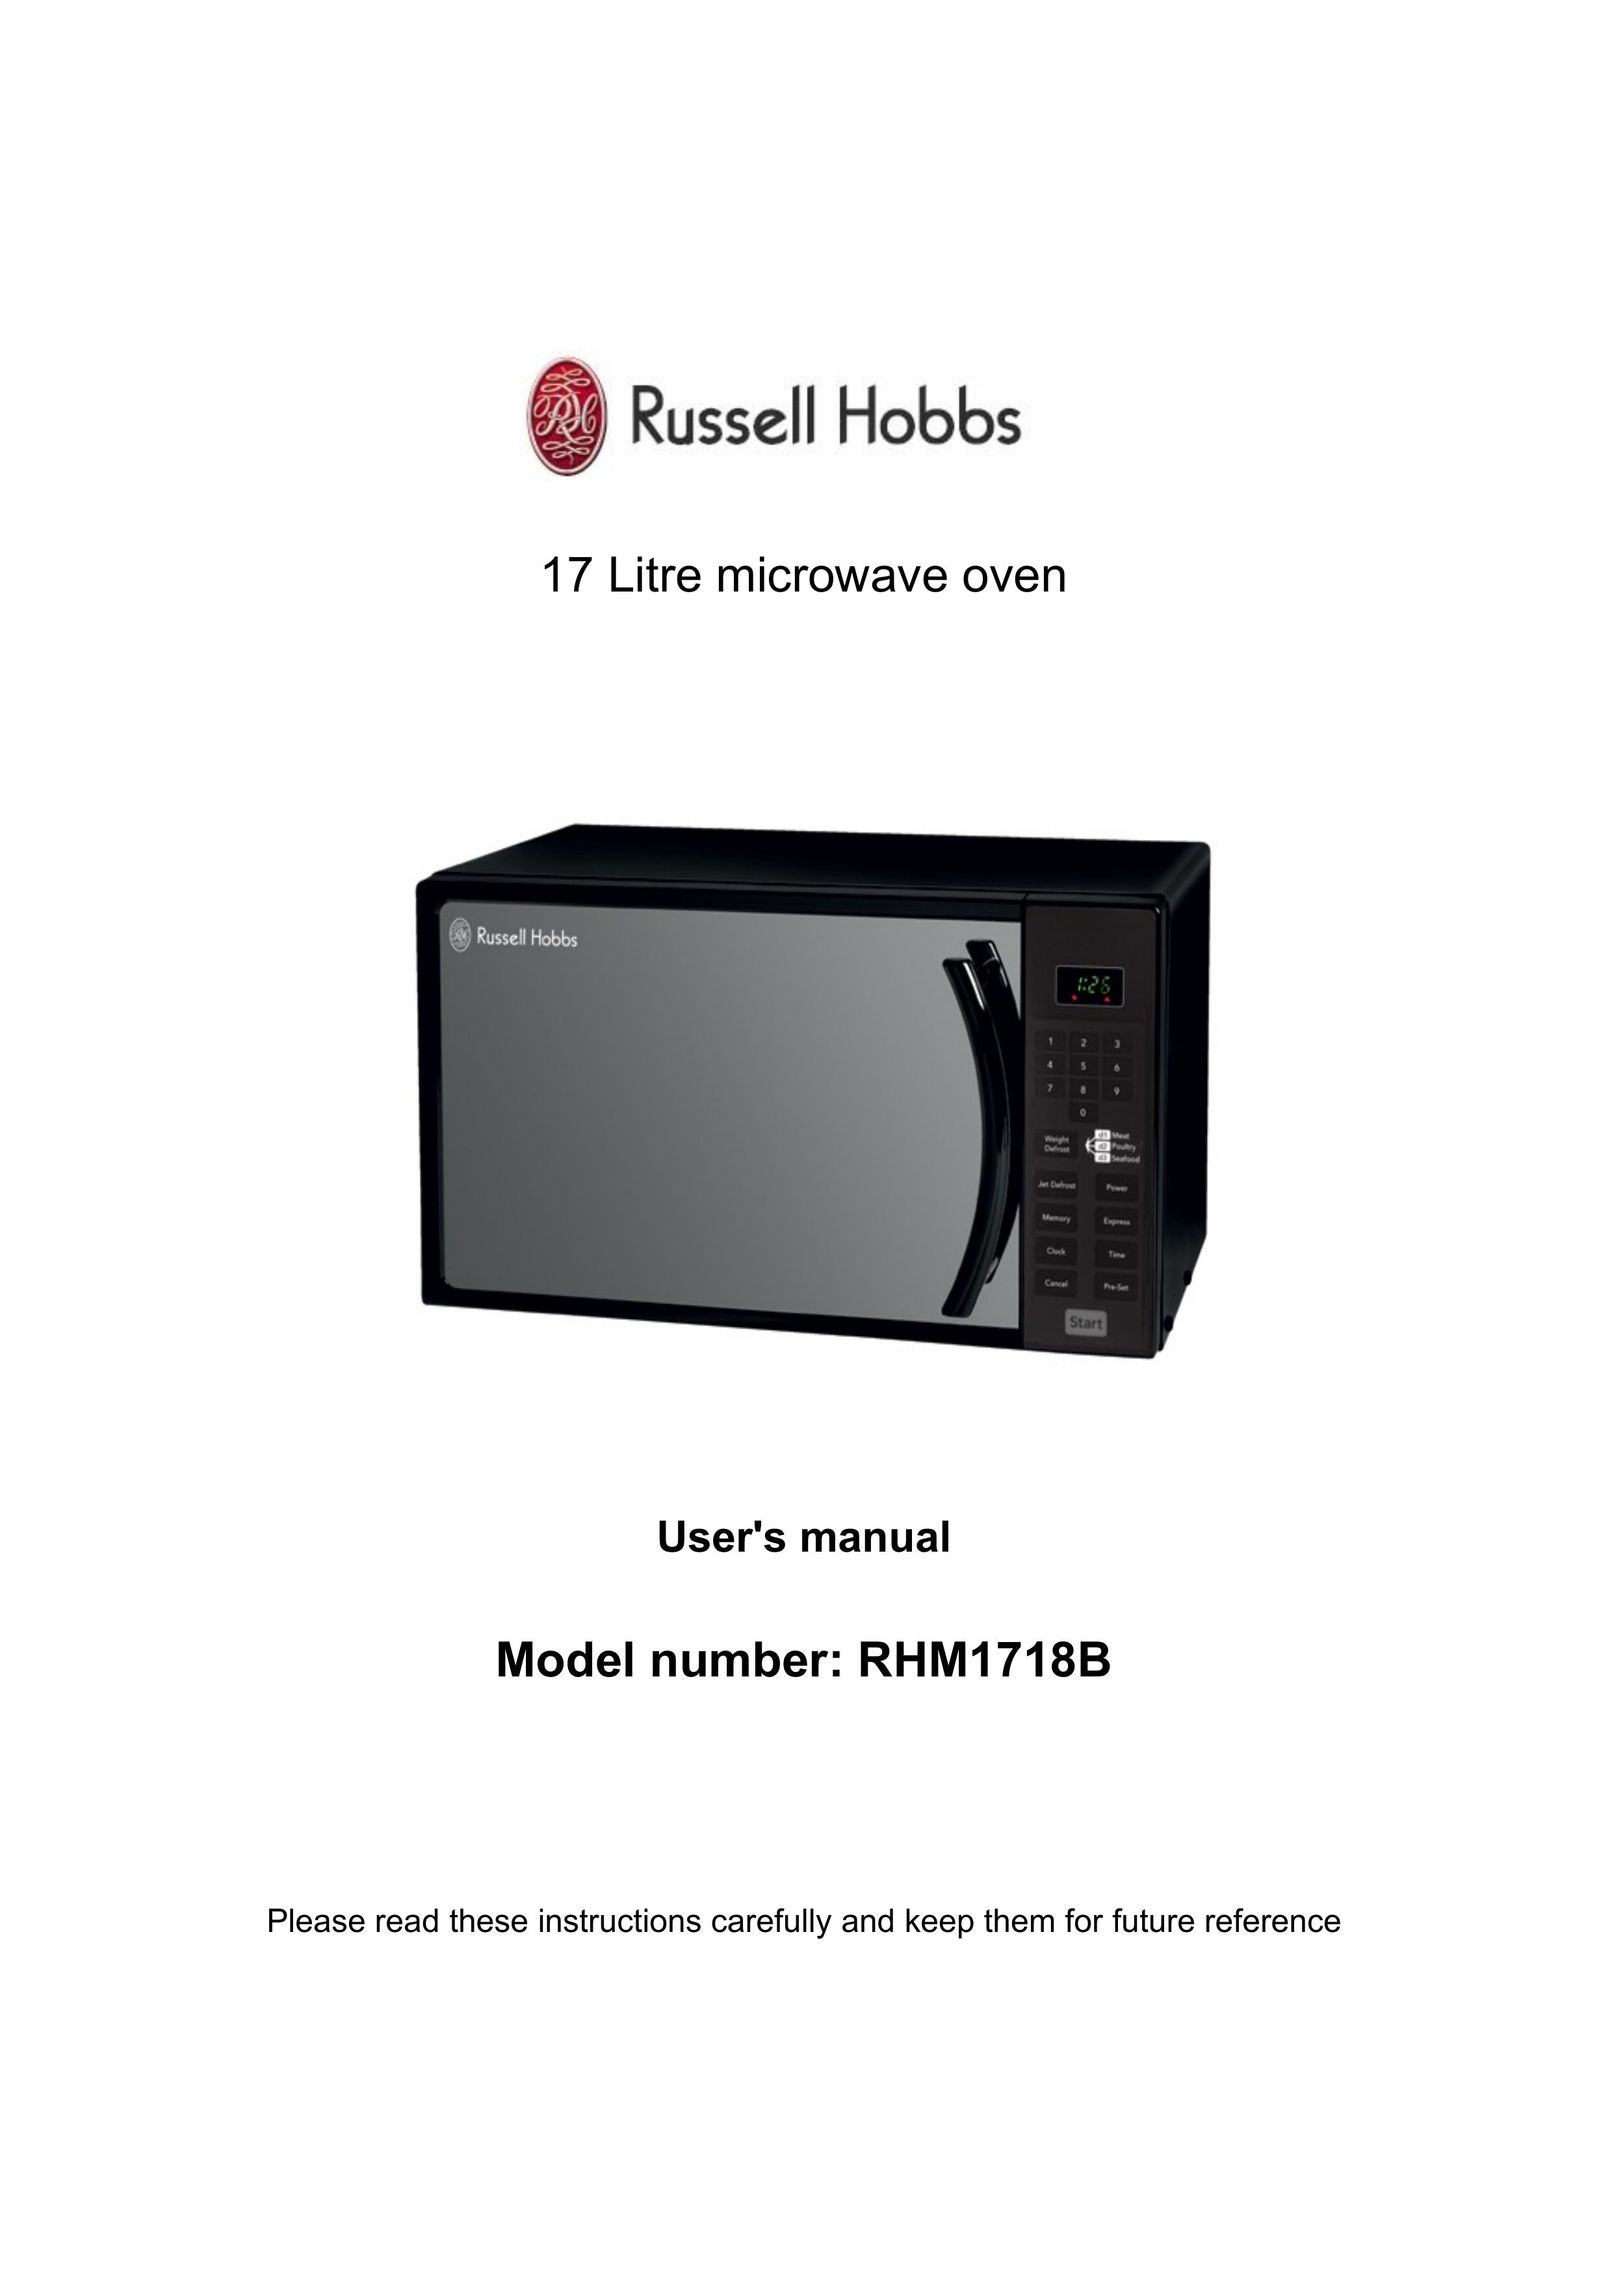 Russell Hobbs RHM1718B Microwave Oven User Manual